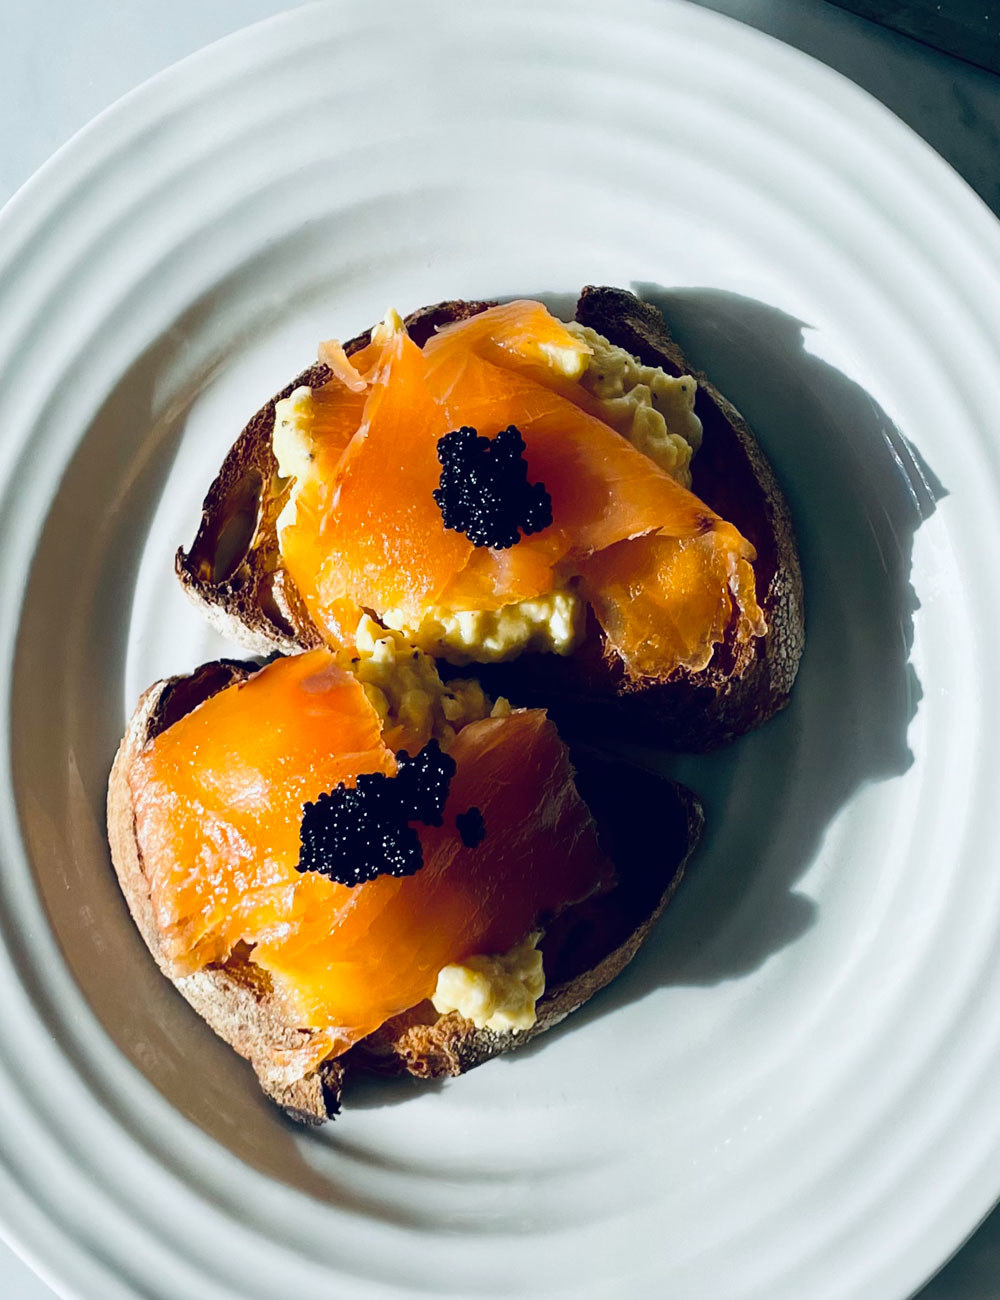 Caviar on smoked salmon and eggs with toast.